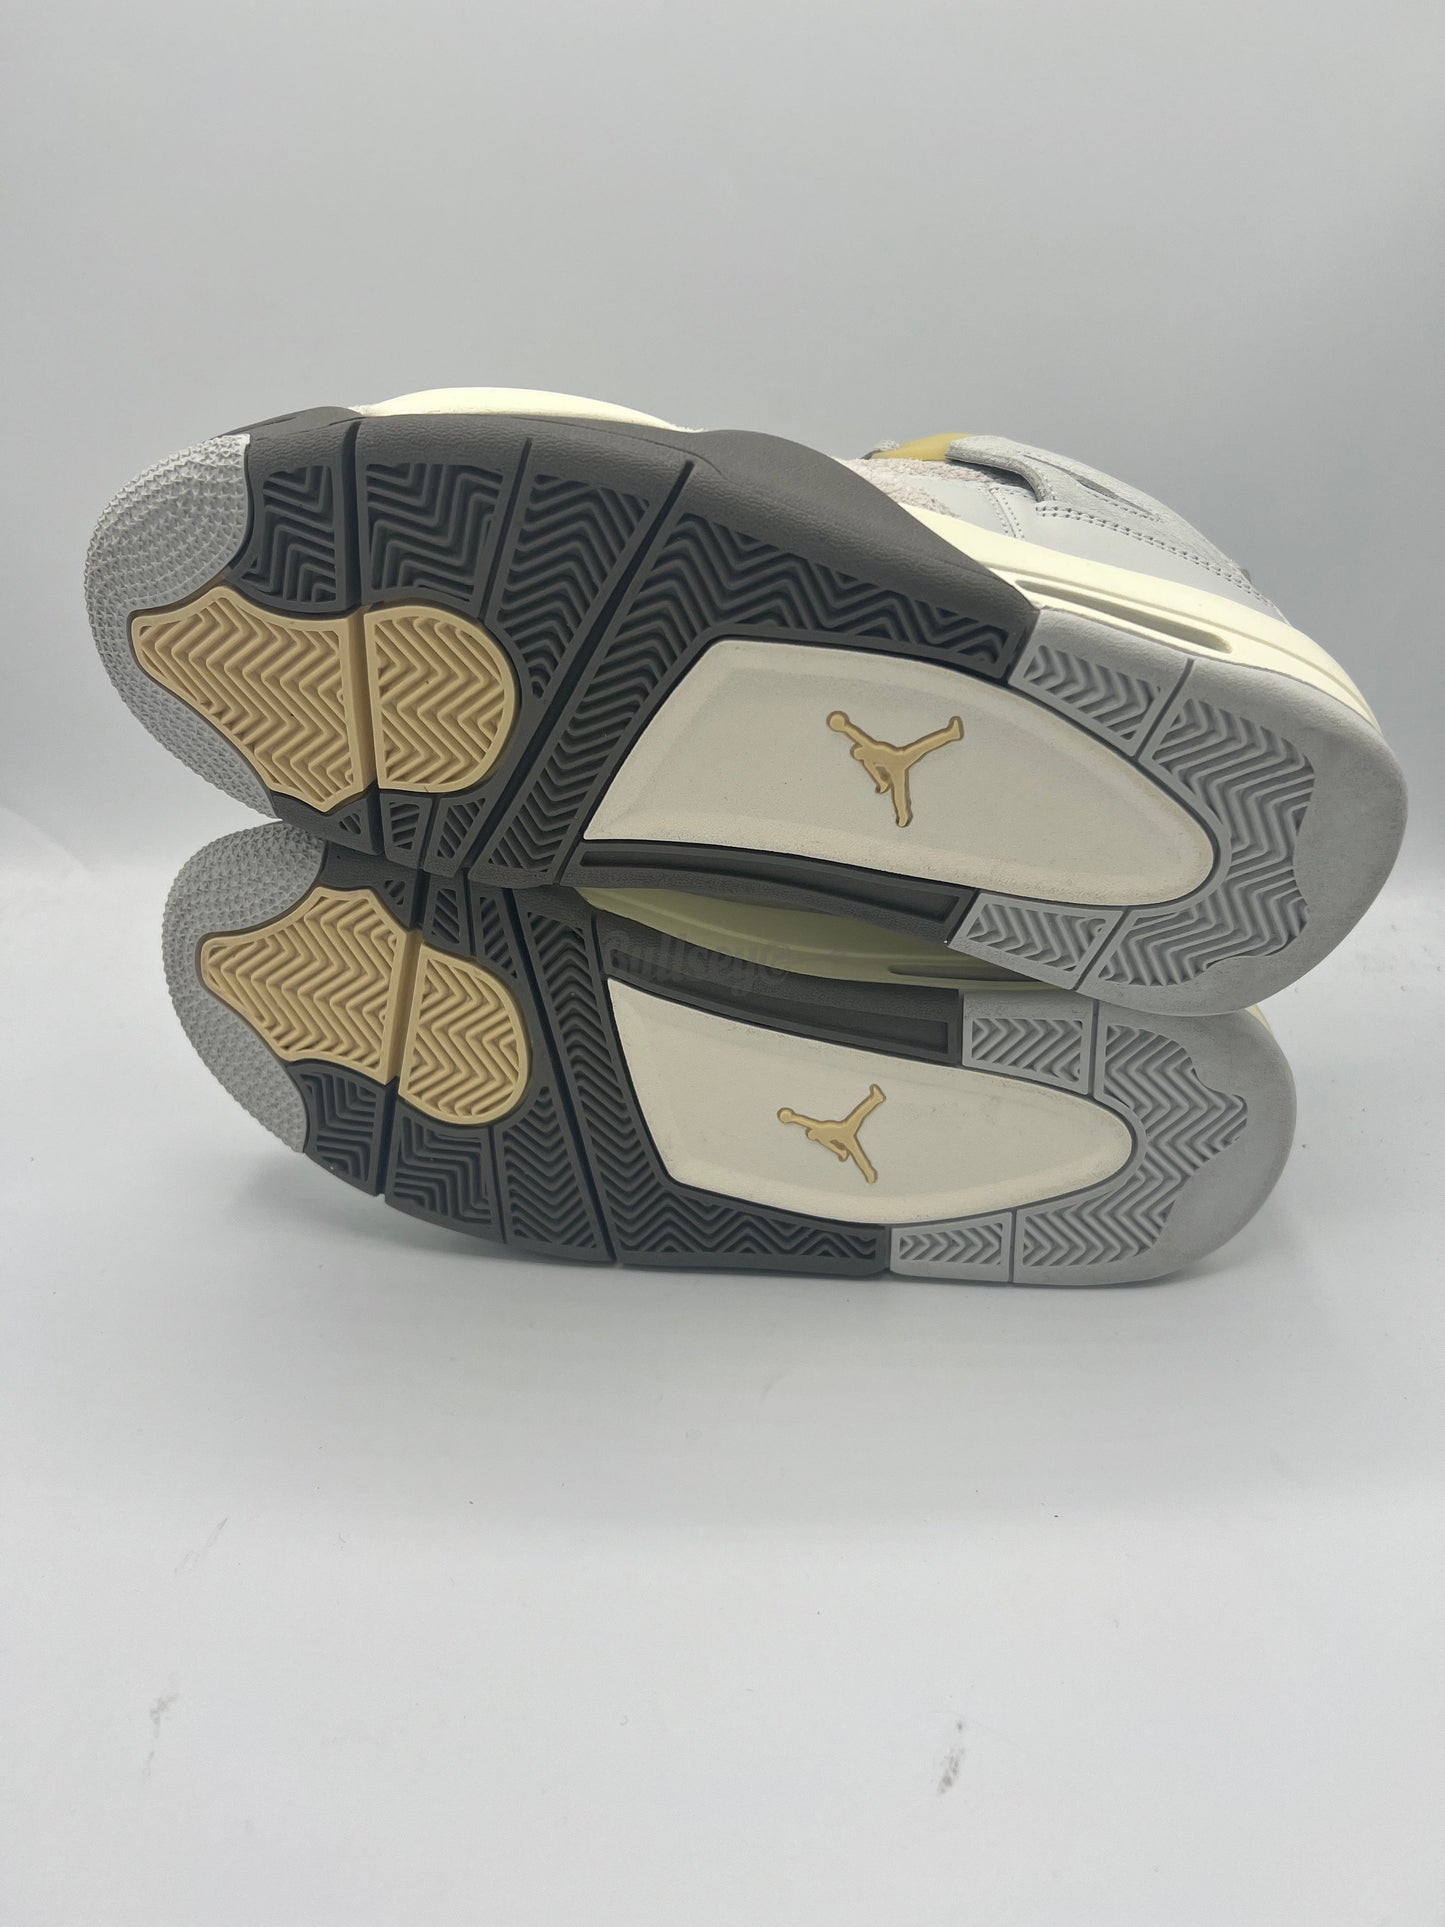 Air Jordan 4 retro "Craft" (PreOwned)